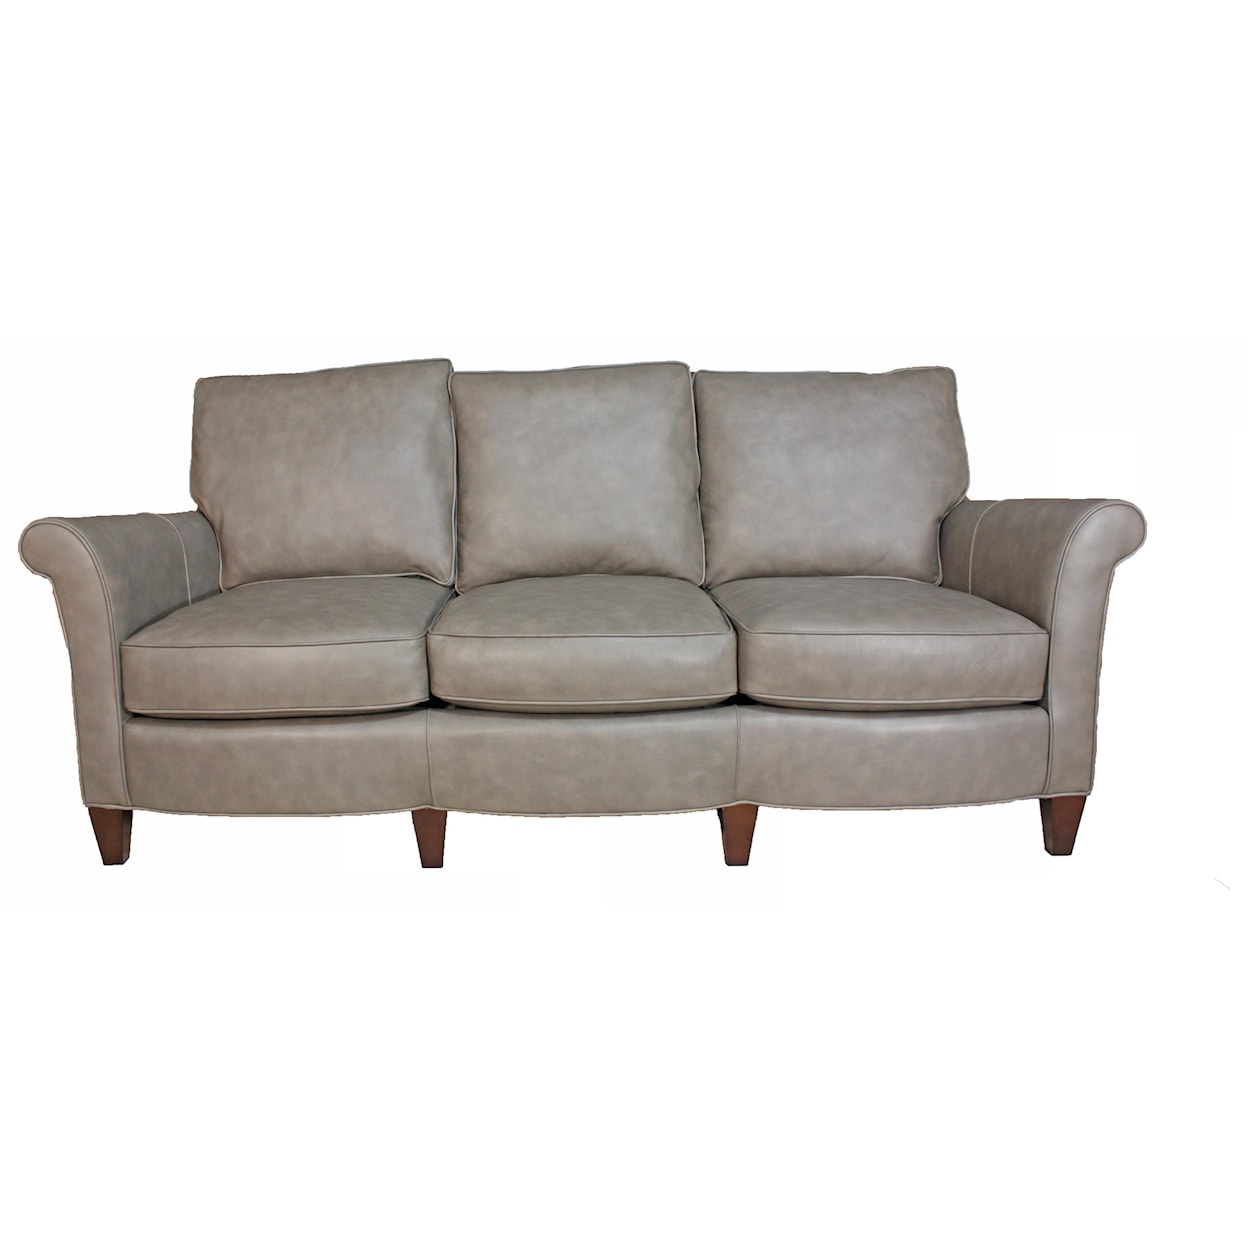 McKinley Leather Dreyfus Traditional 3 Cushion Sofa